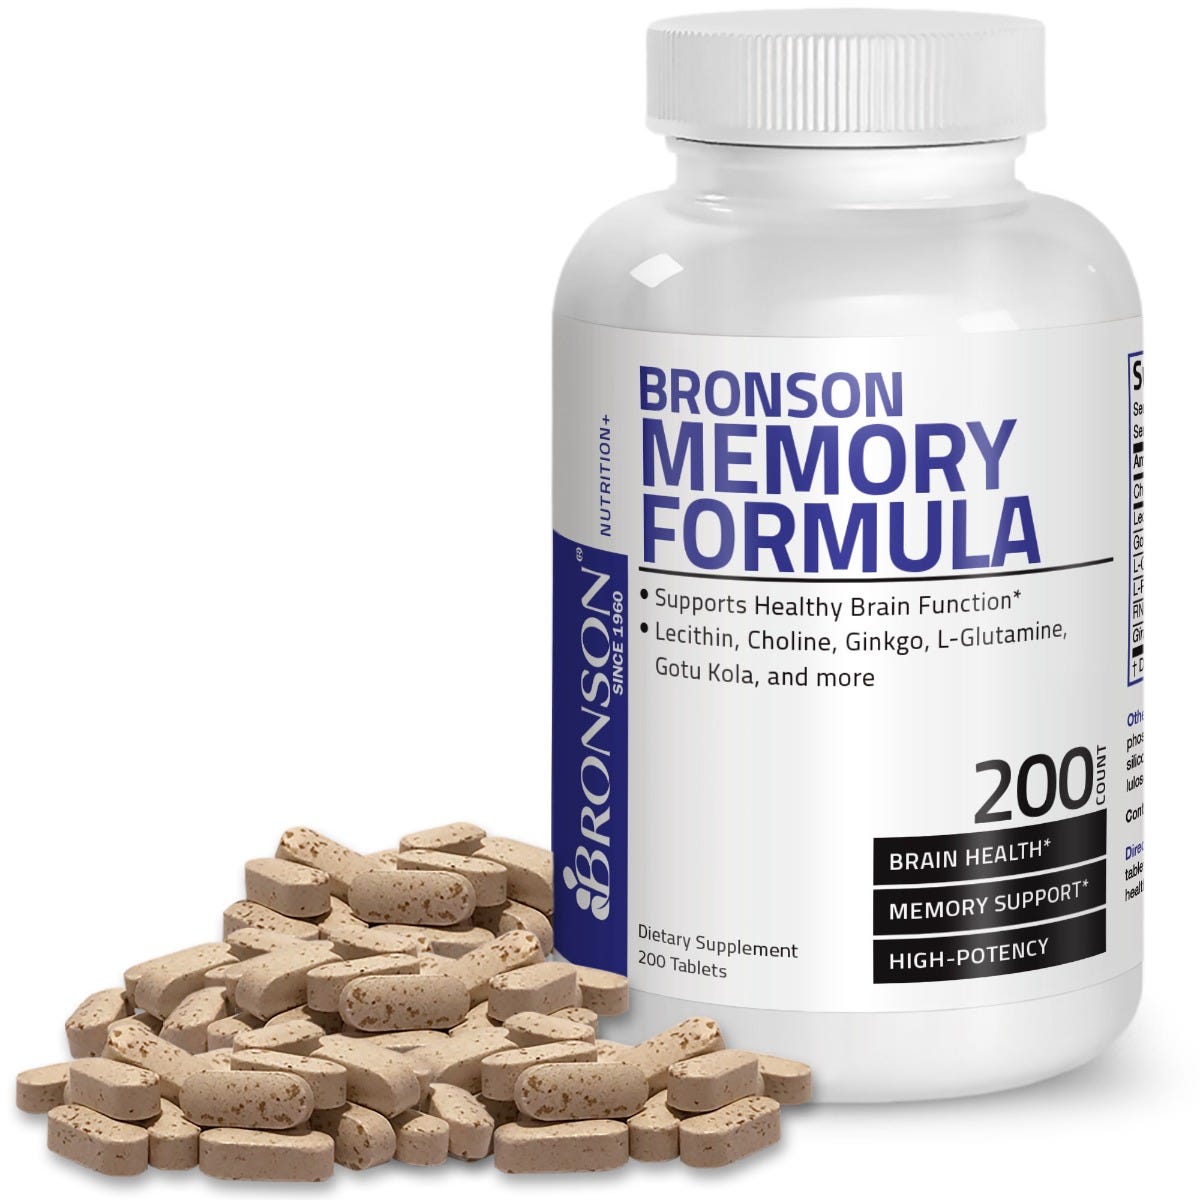 Bronson Memory Formula - 200 Tablets view 3 of 6